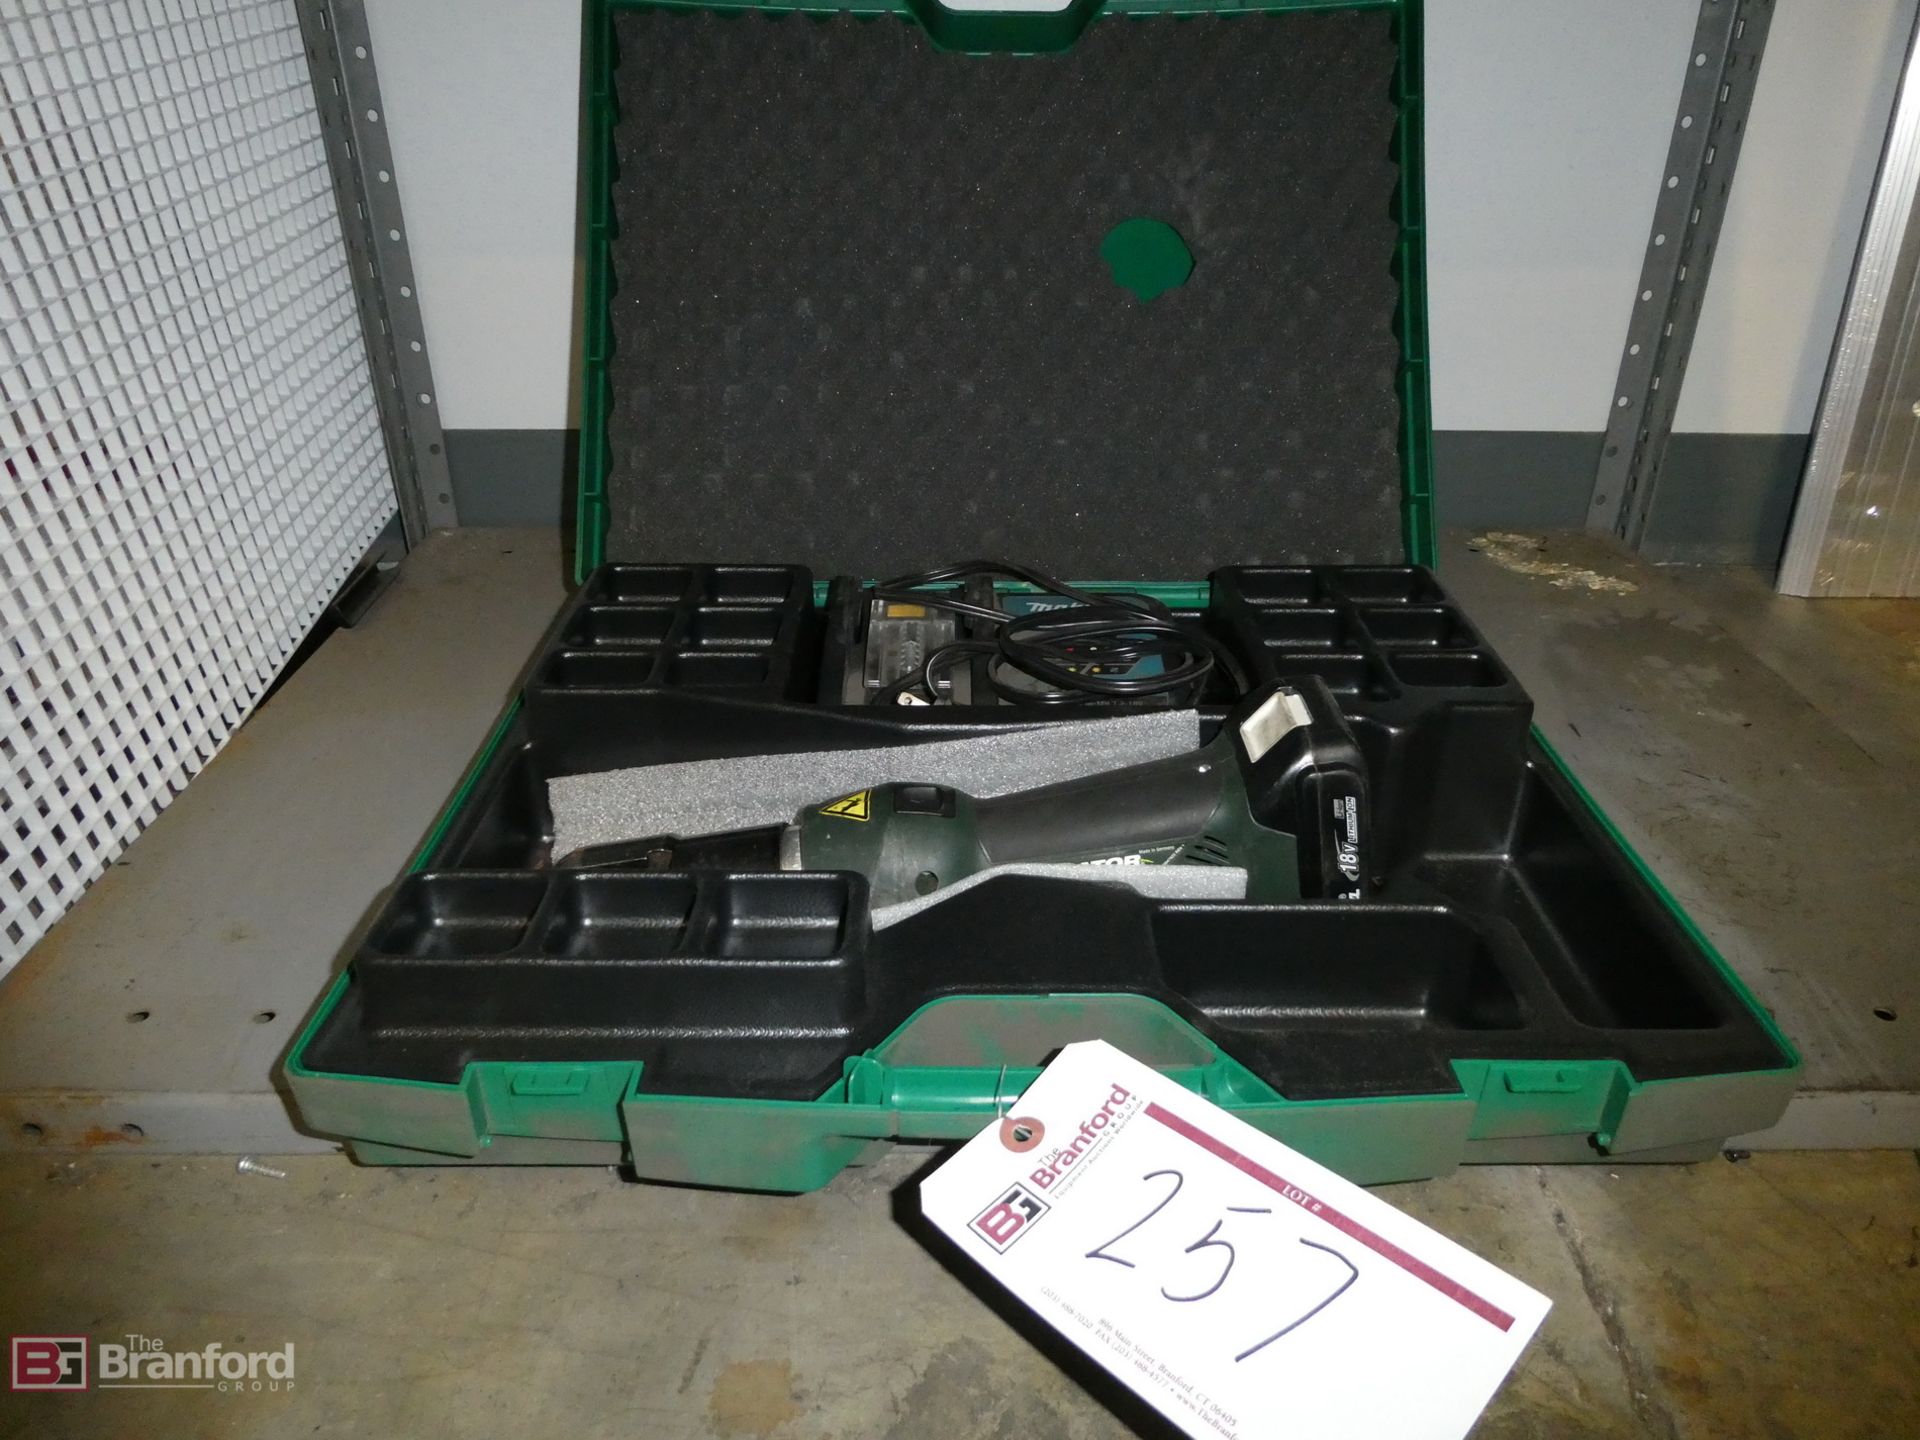 Makita/Greenlee Model Gator, 18V In-Line Cutter Kit